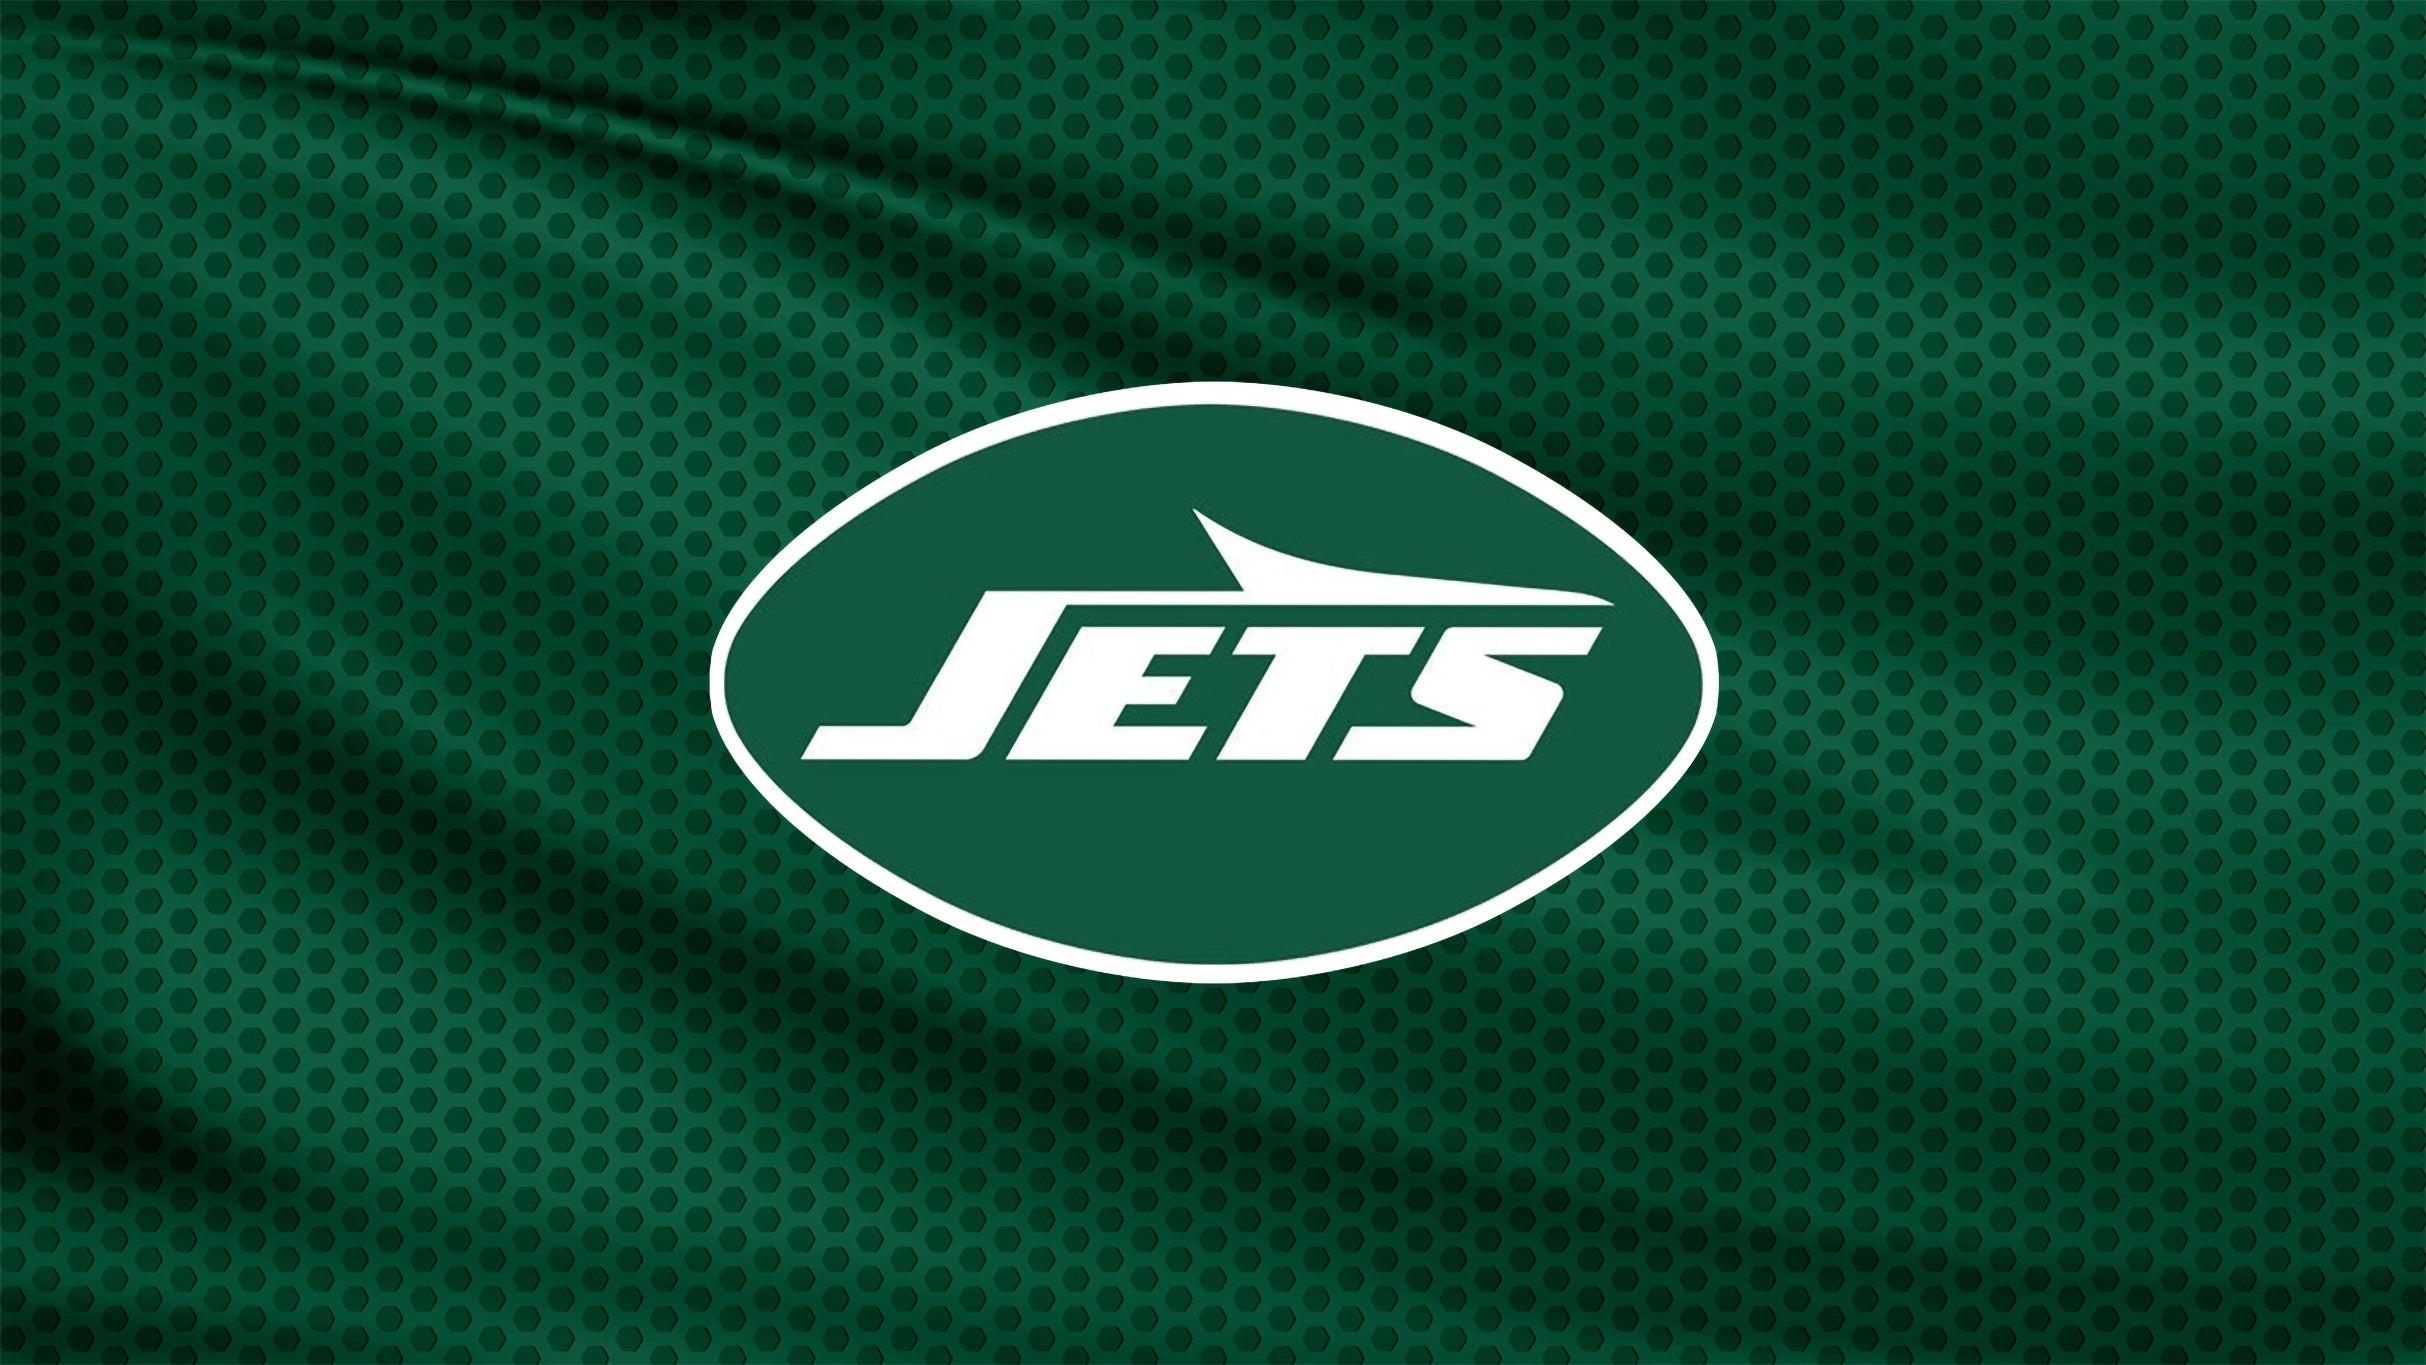 Preseason: New York Jets v. New York Giants in East Rutherford promo photo for STH presale offer code